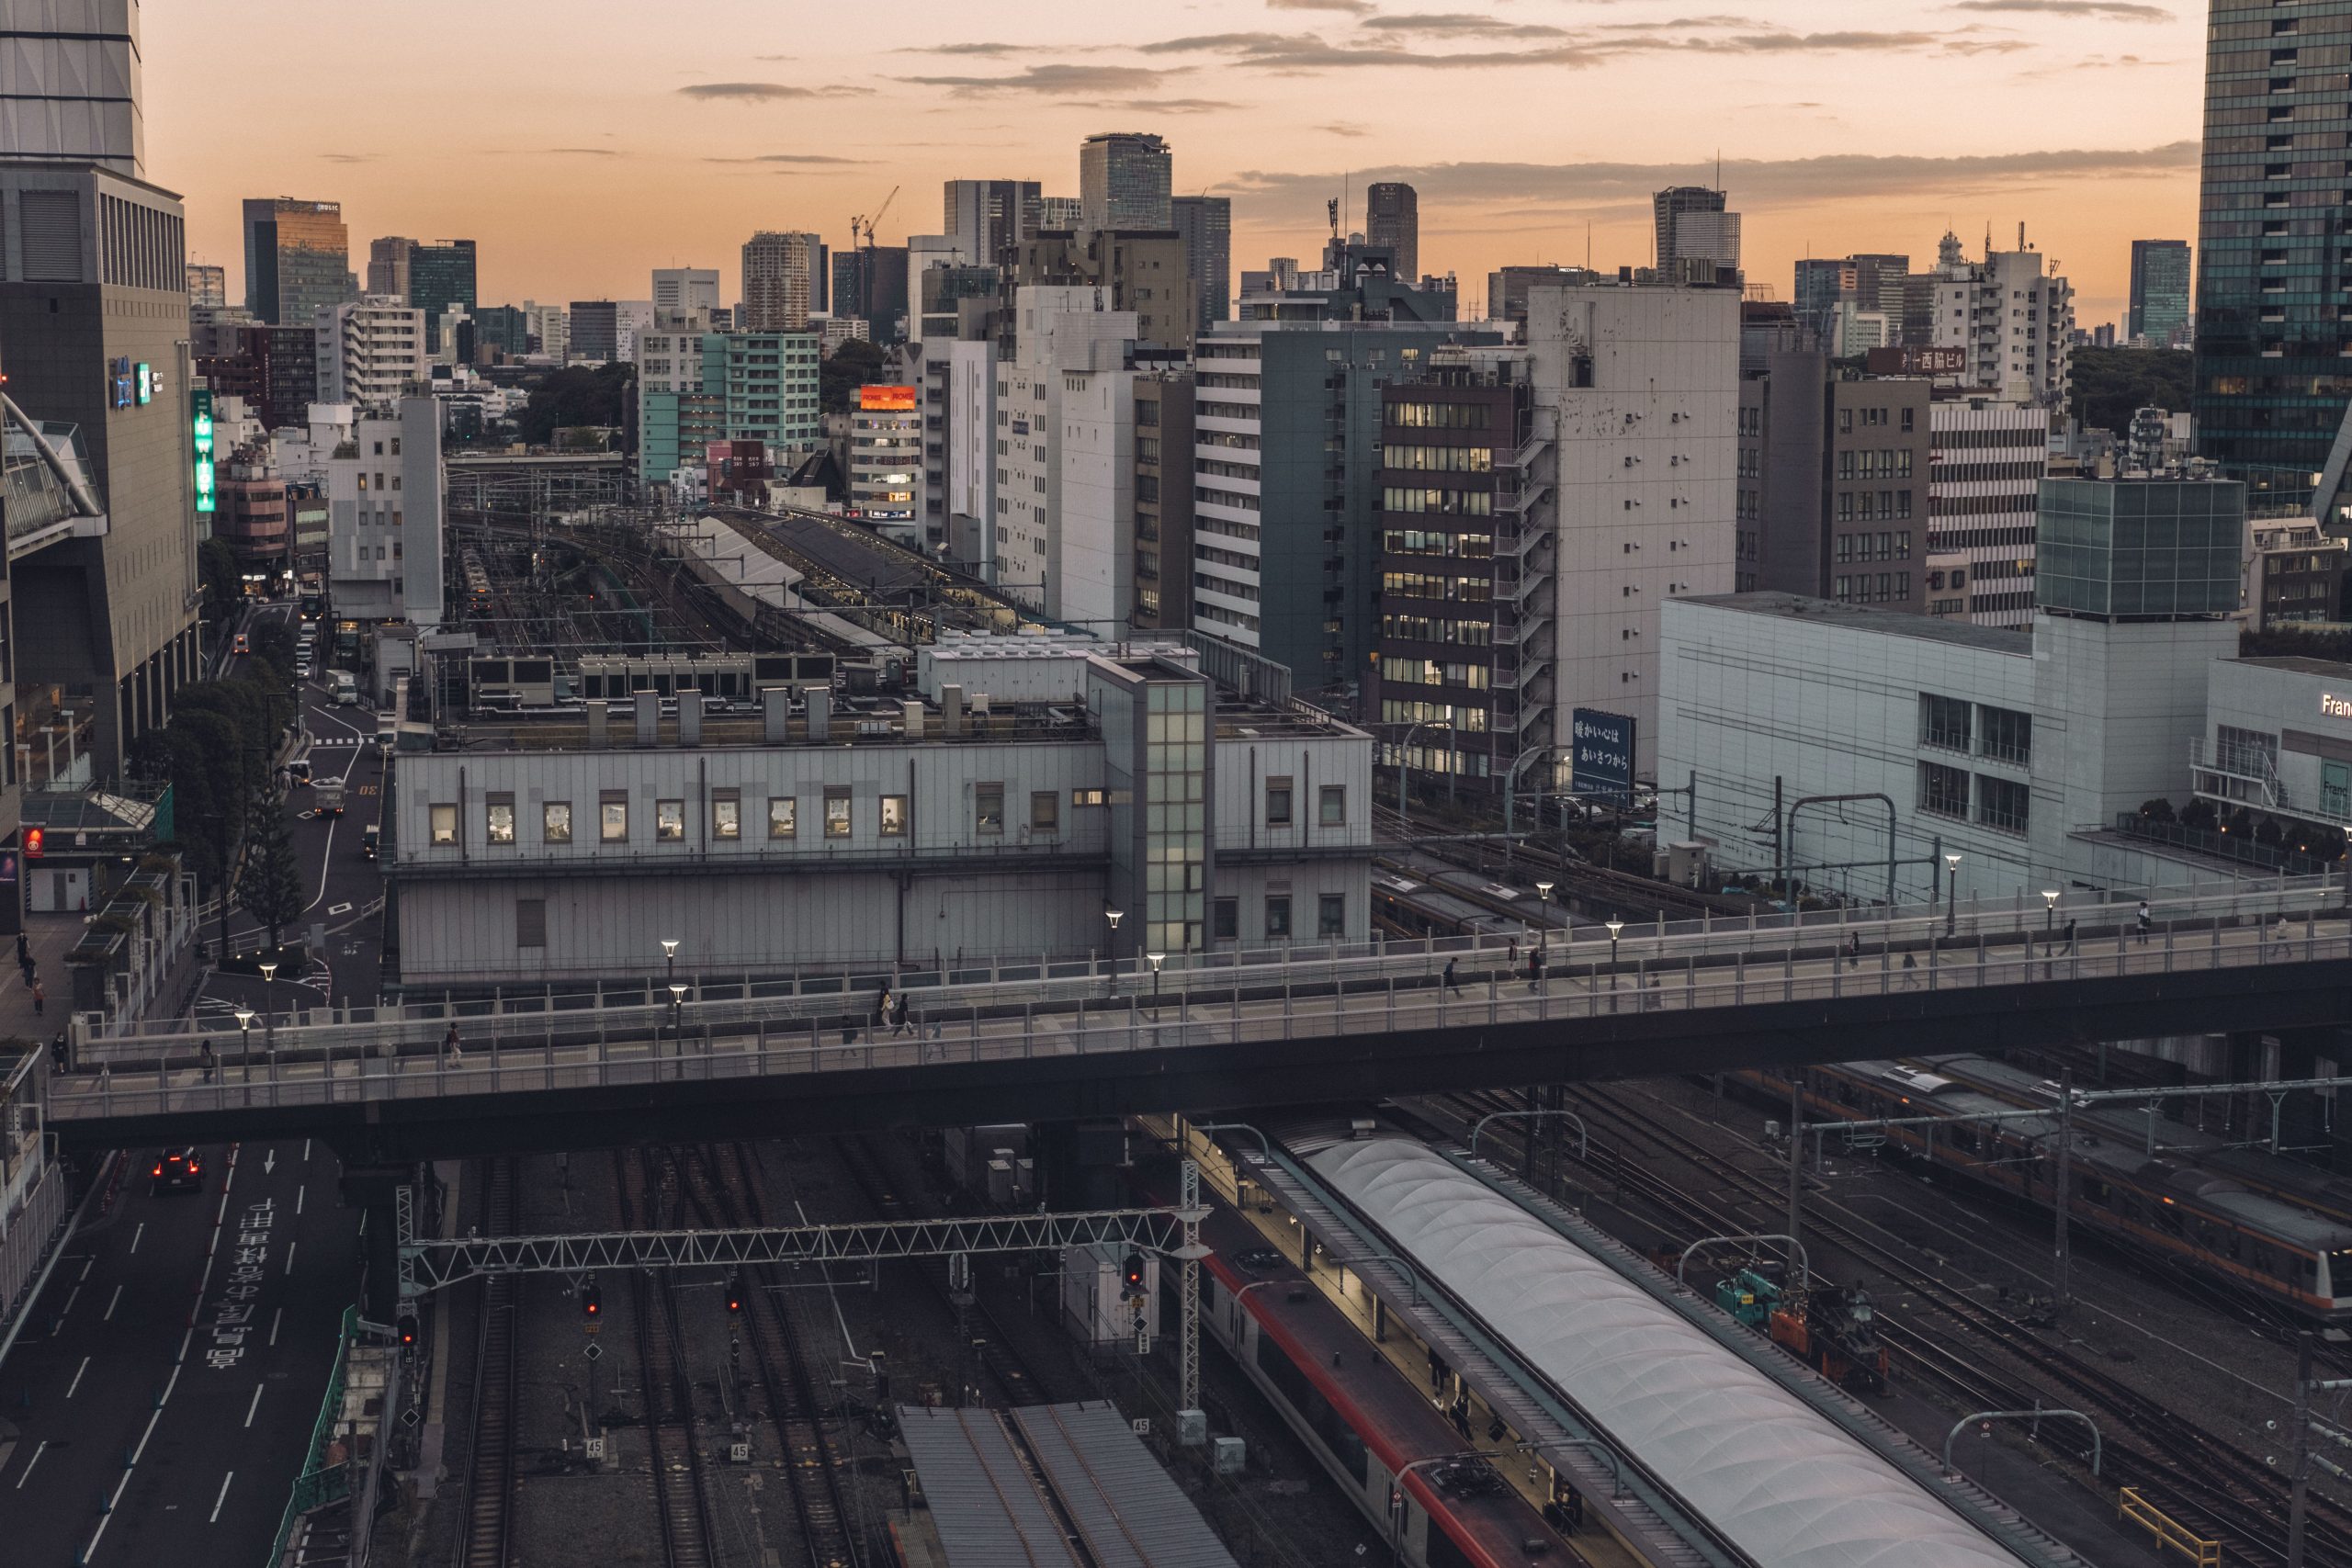 Shinjuku train station as seen from the viewing platform